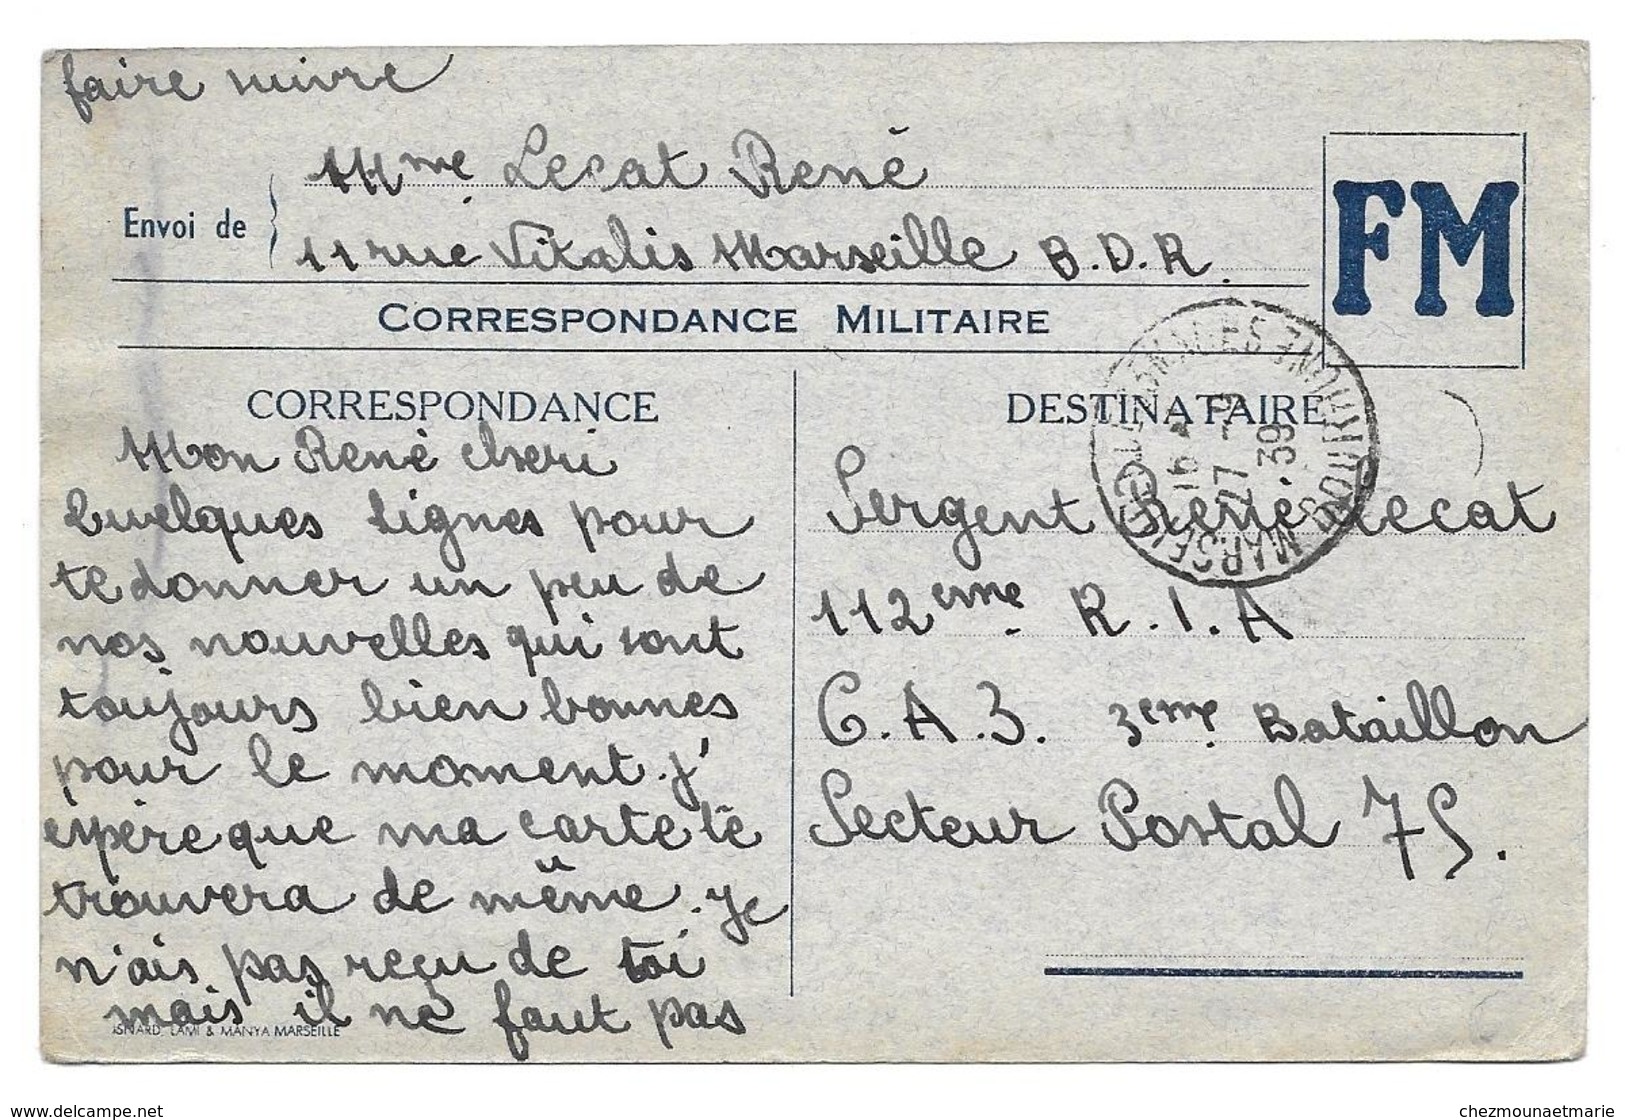 WWII 1939 RENE LECAT 112 RIA SP 75 DE RUE VITALIS MARSEILLE - CPA CORRESPONDANCE MILITAIRE - Guerre 1939-45